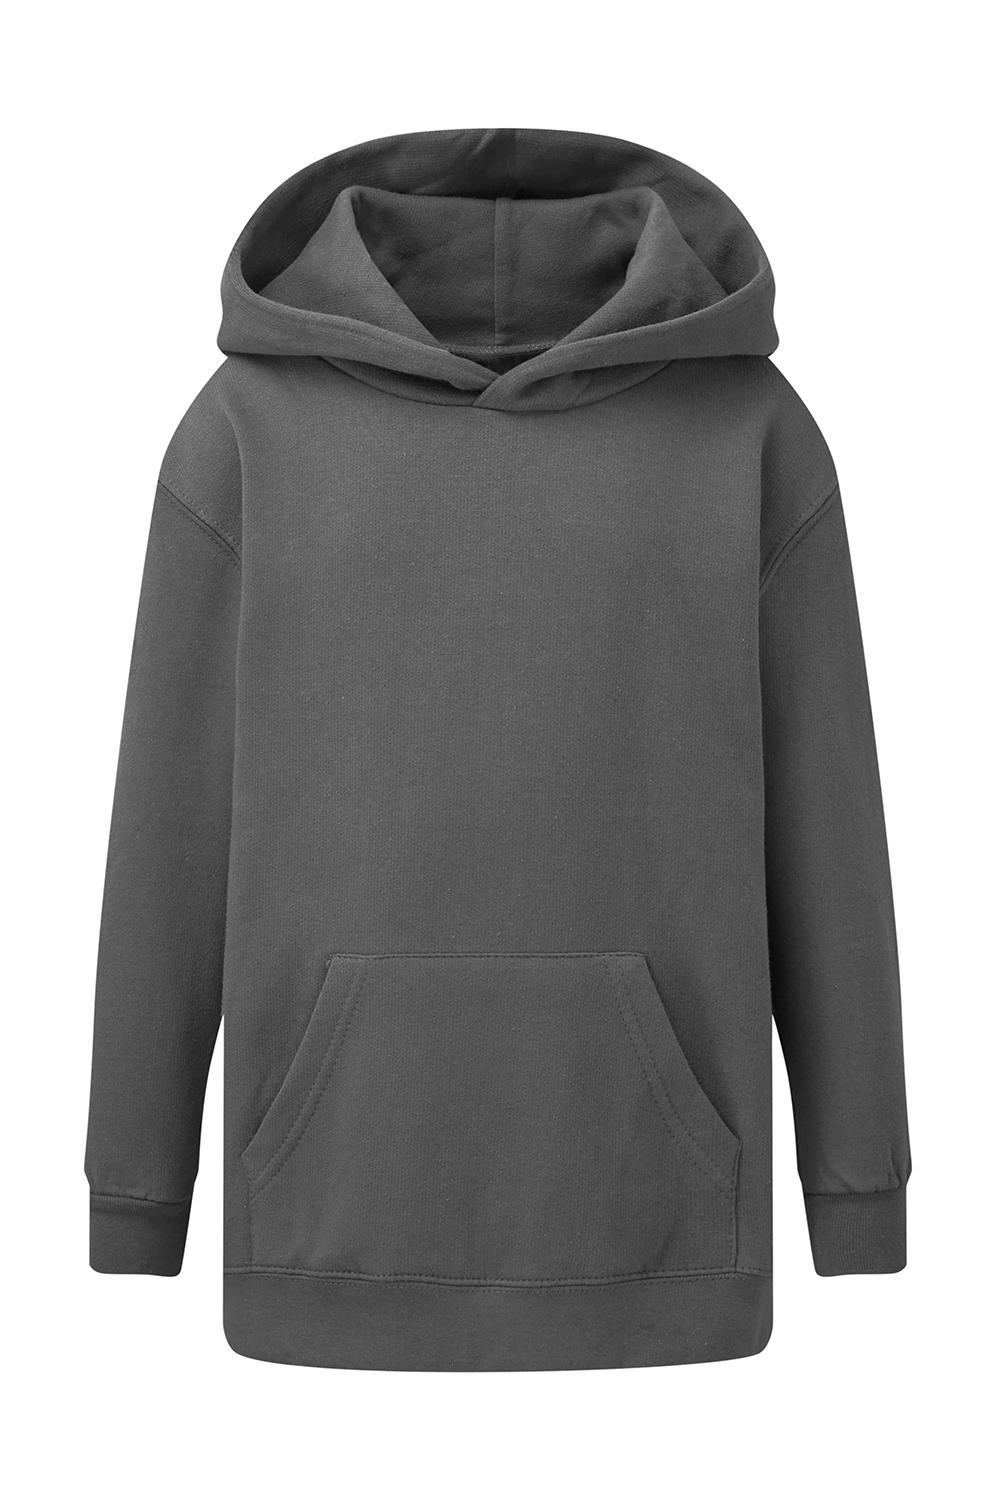  Kids Hooded Sweatshirt in Farbe Grey